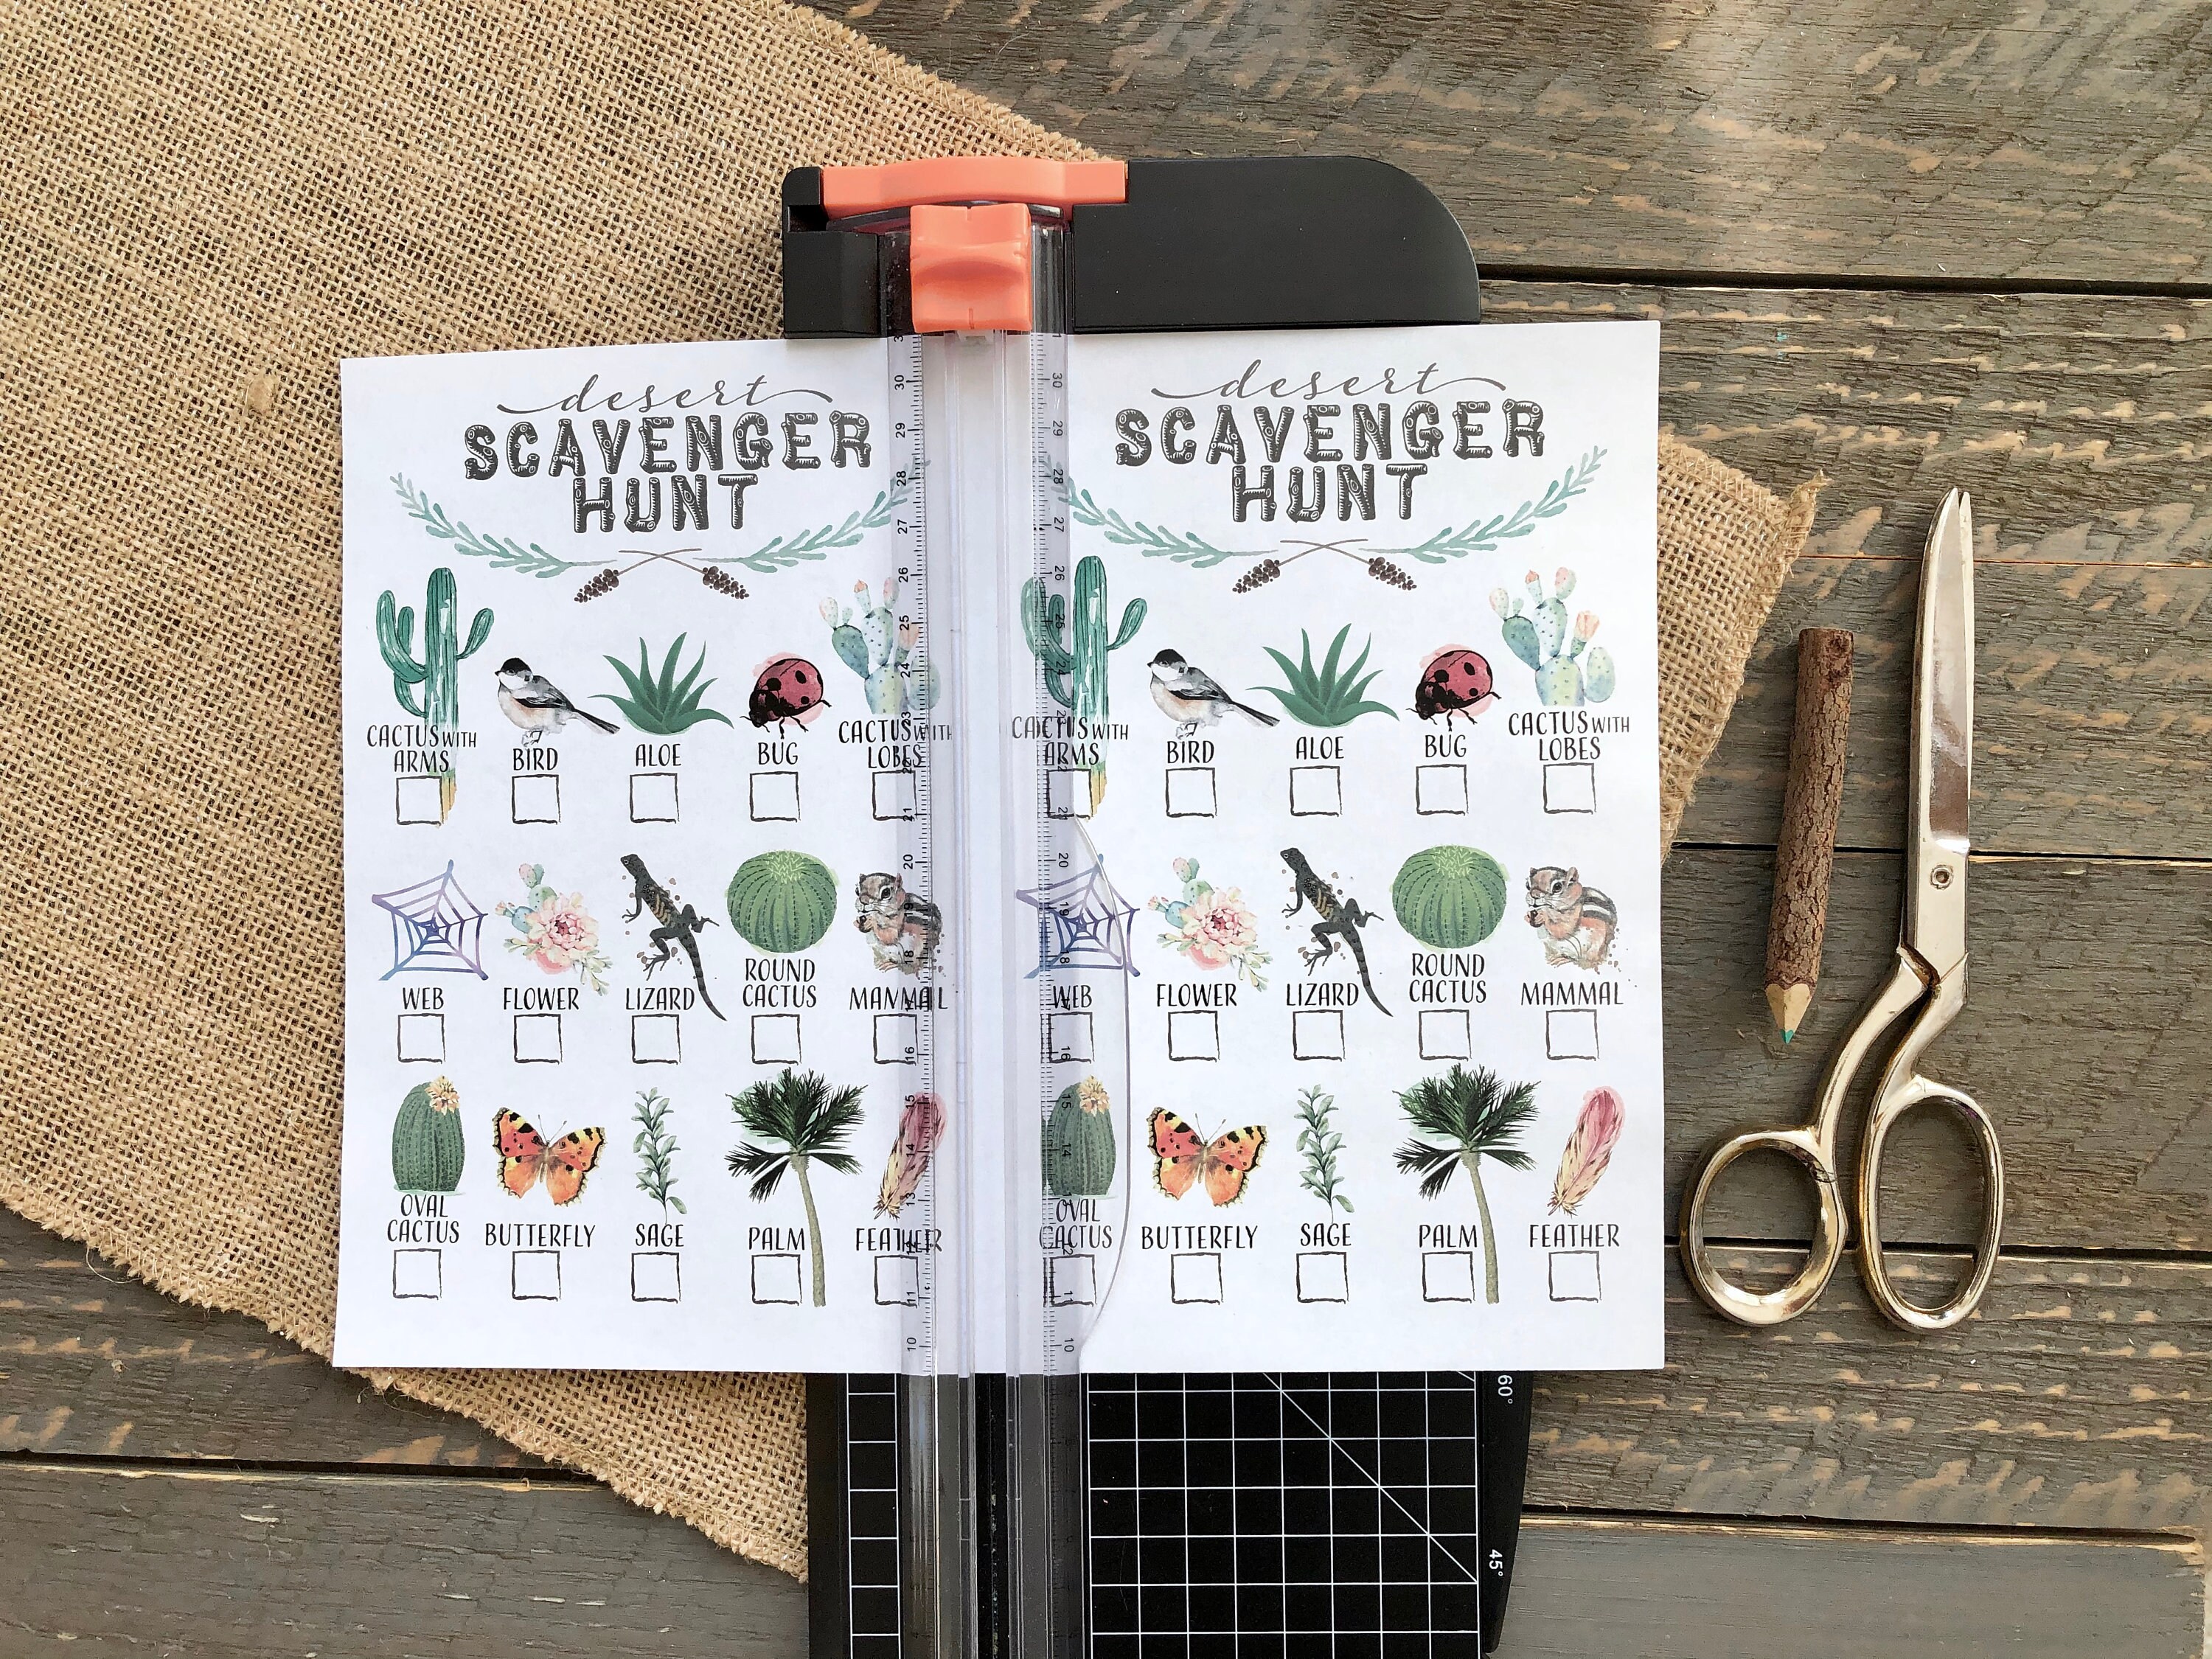 DIY Scavenger Hunt Journal